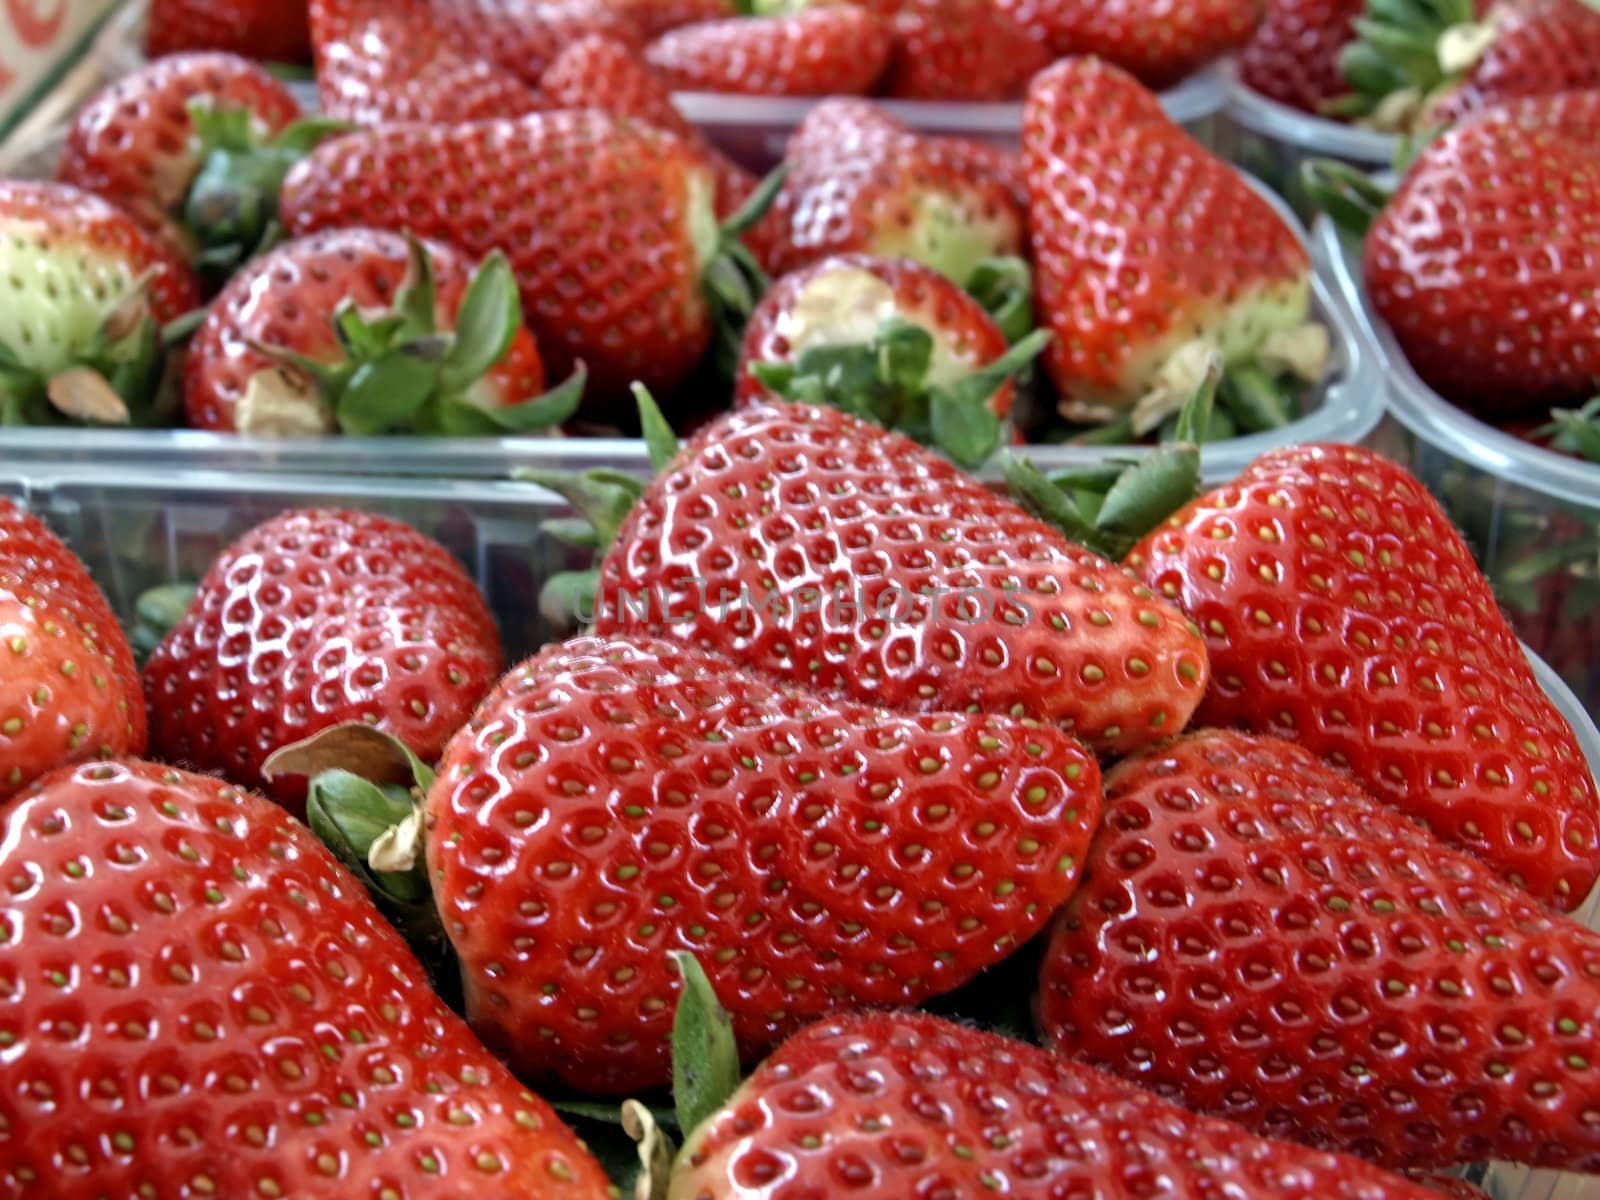 strawberries at street sale